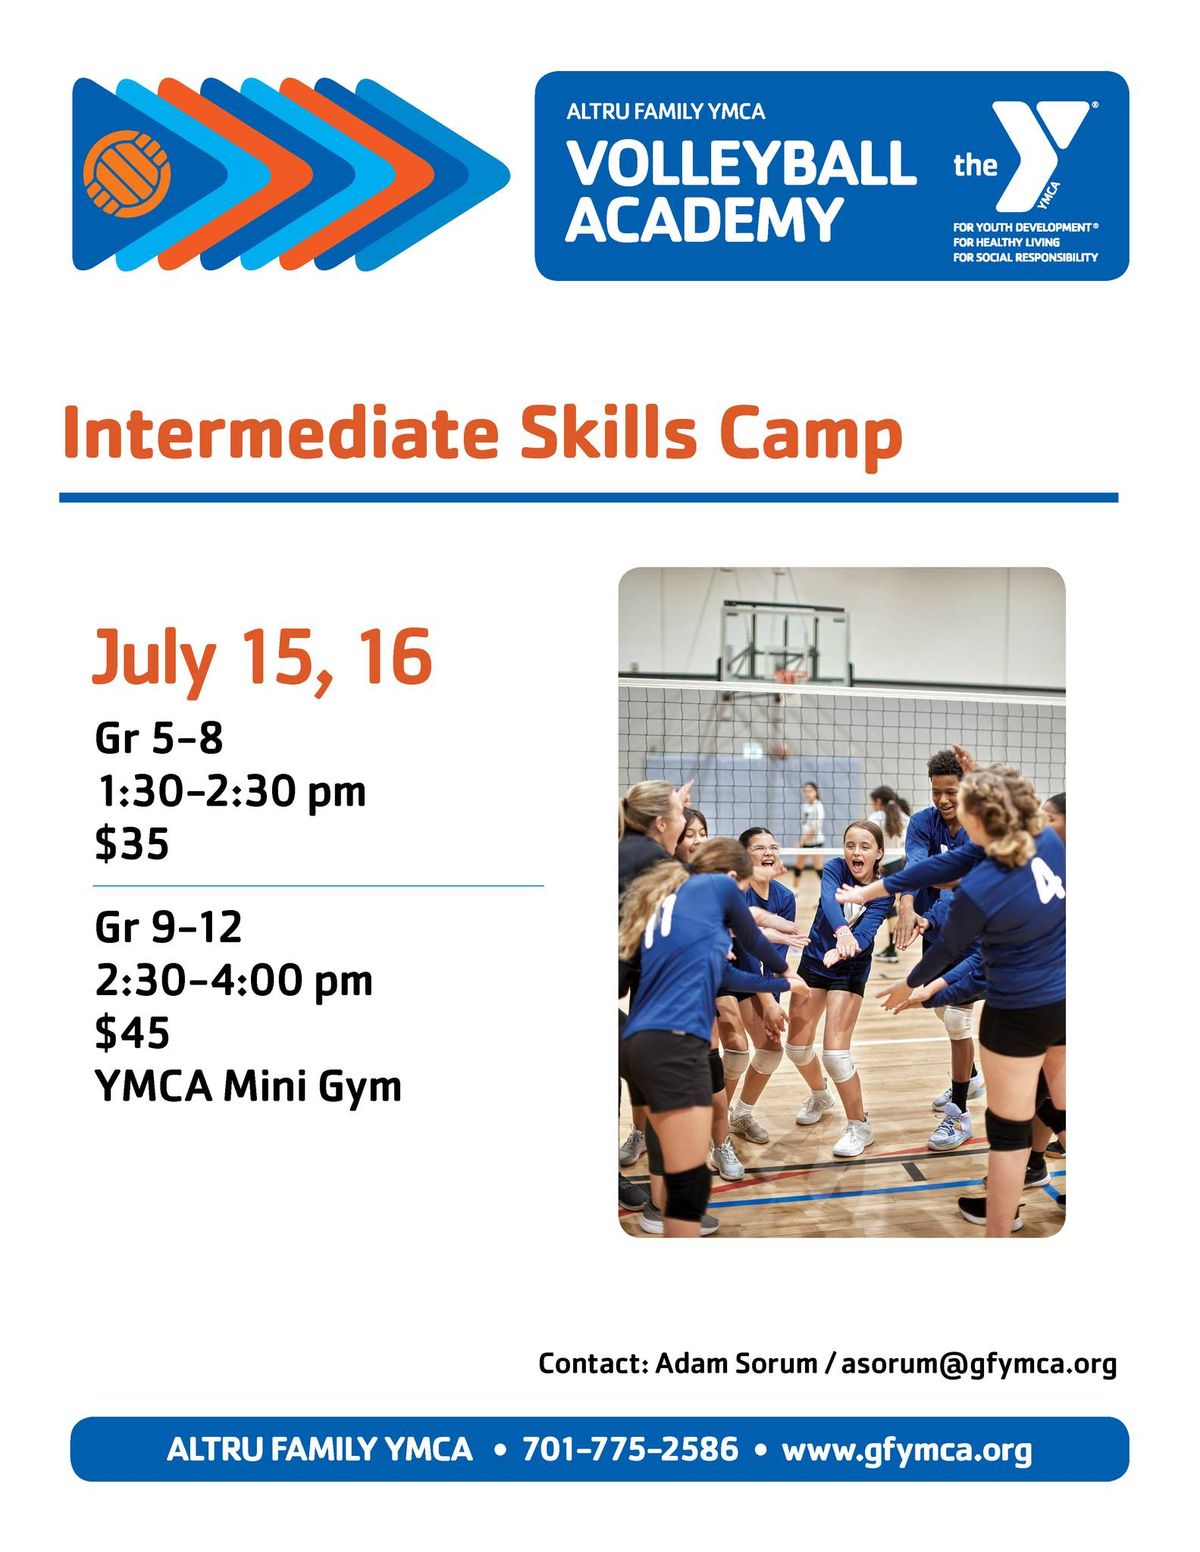 9th to 12th Grade Volleyball Academy Intermediate Skills Camp